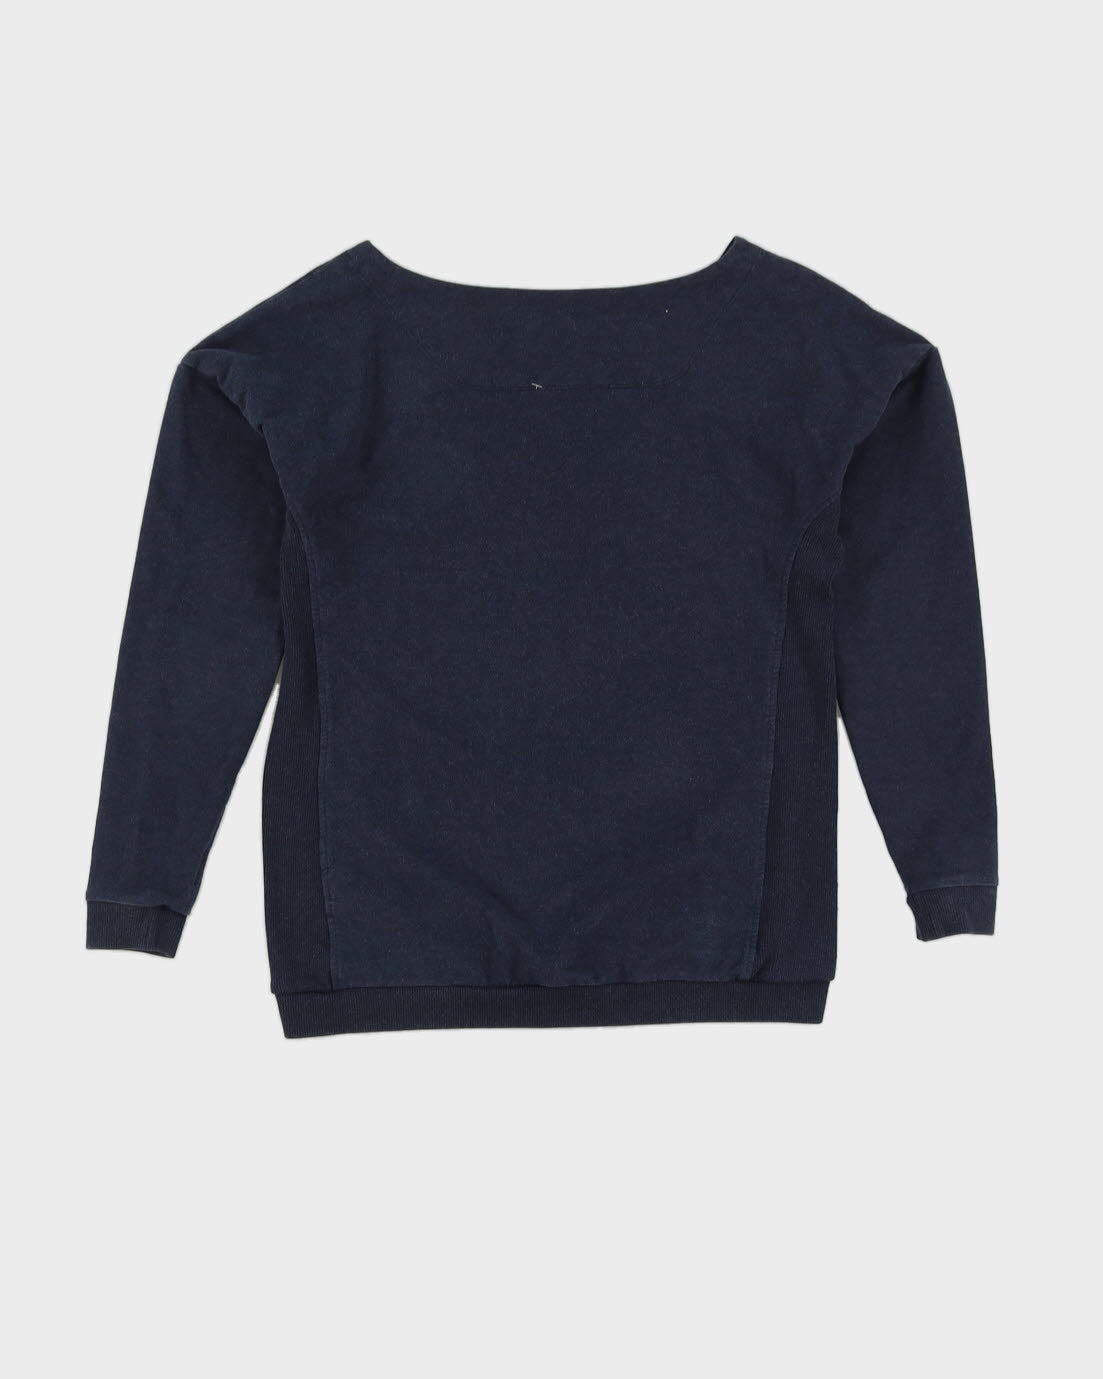 Arc'teryx Blue Sweatshirt - S